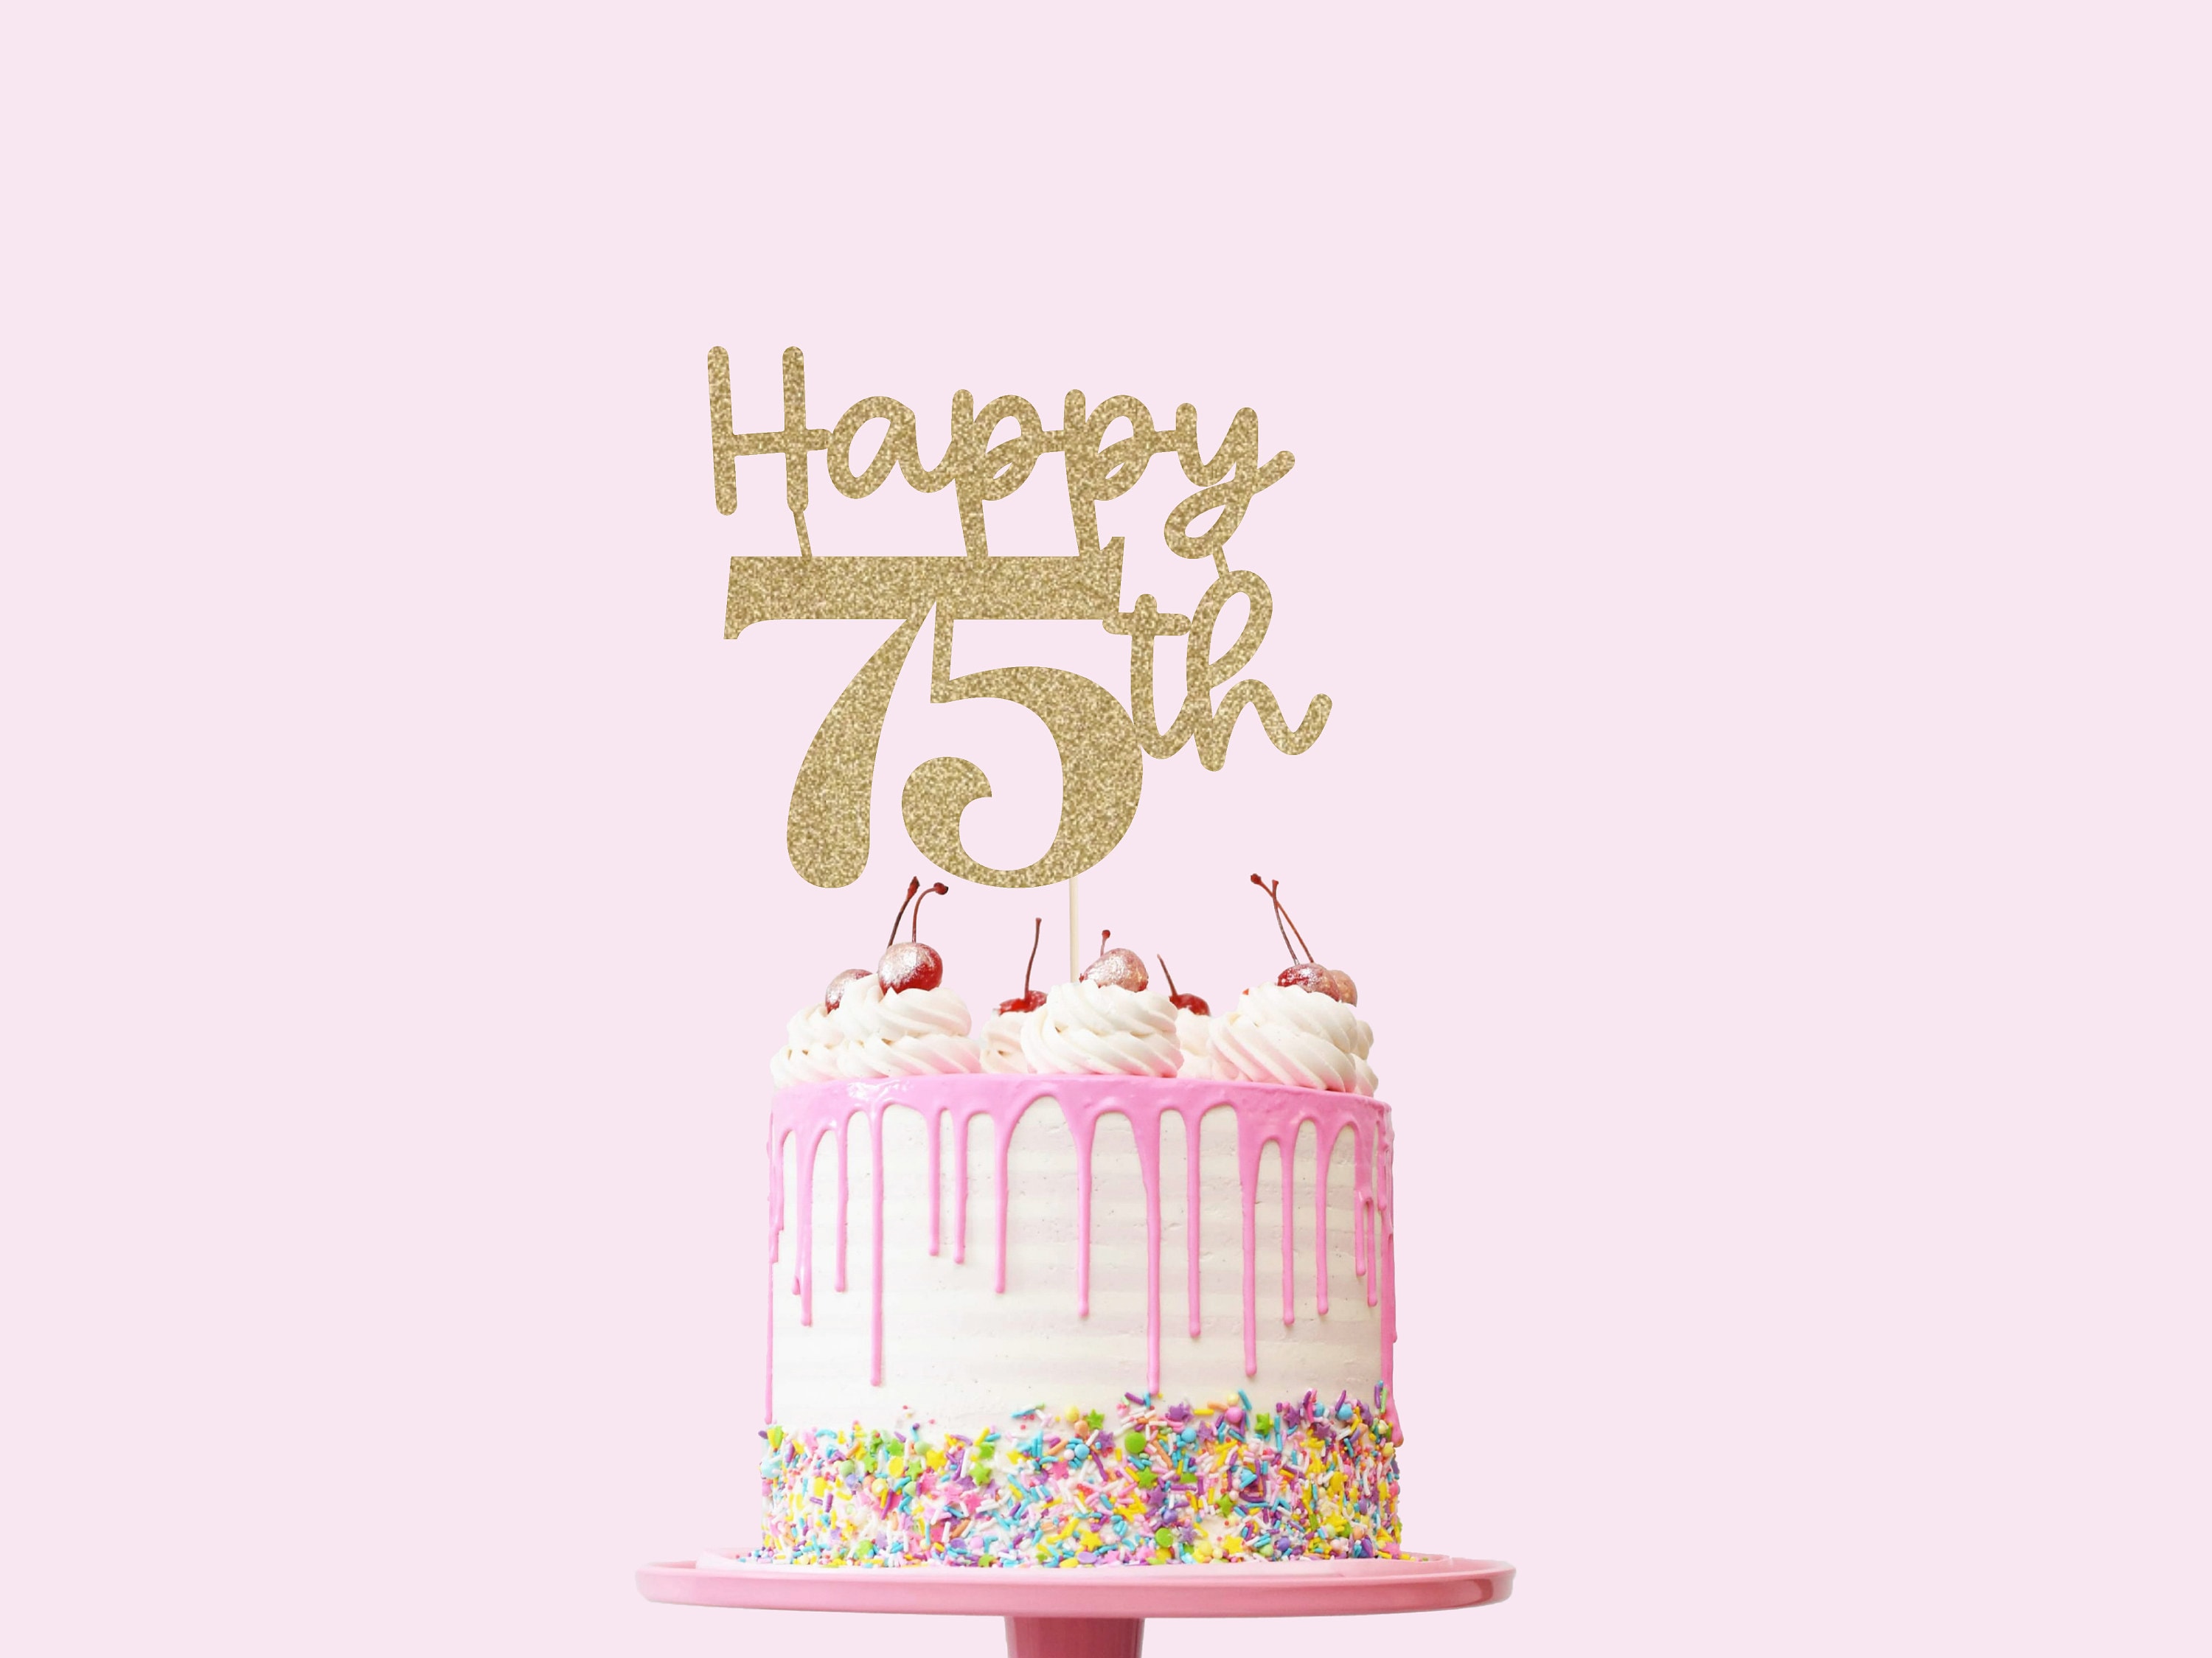 Happy 75th Birthday Cake Topper, Gold Glitter 75th Rwanda